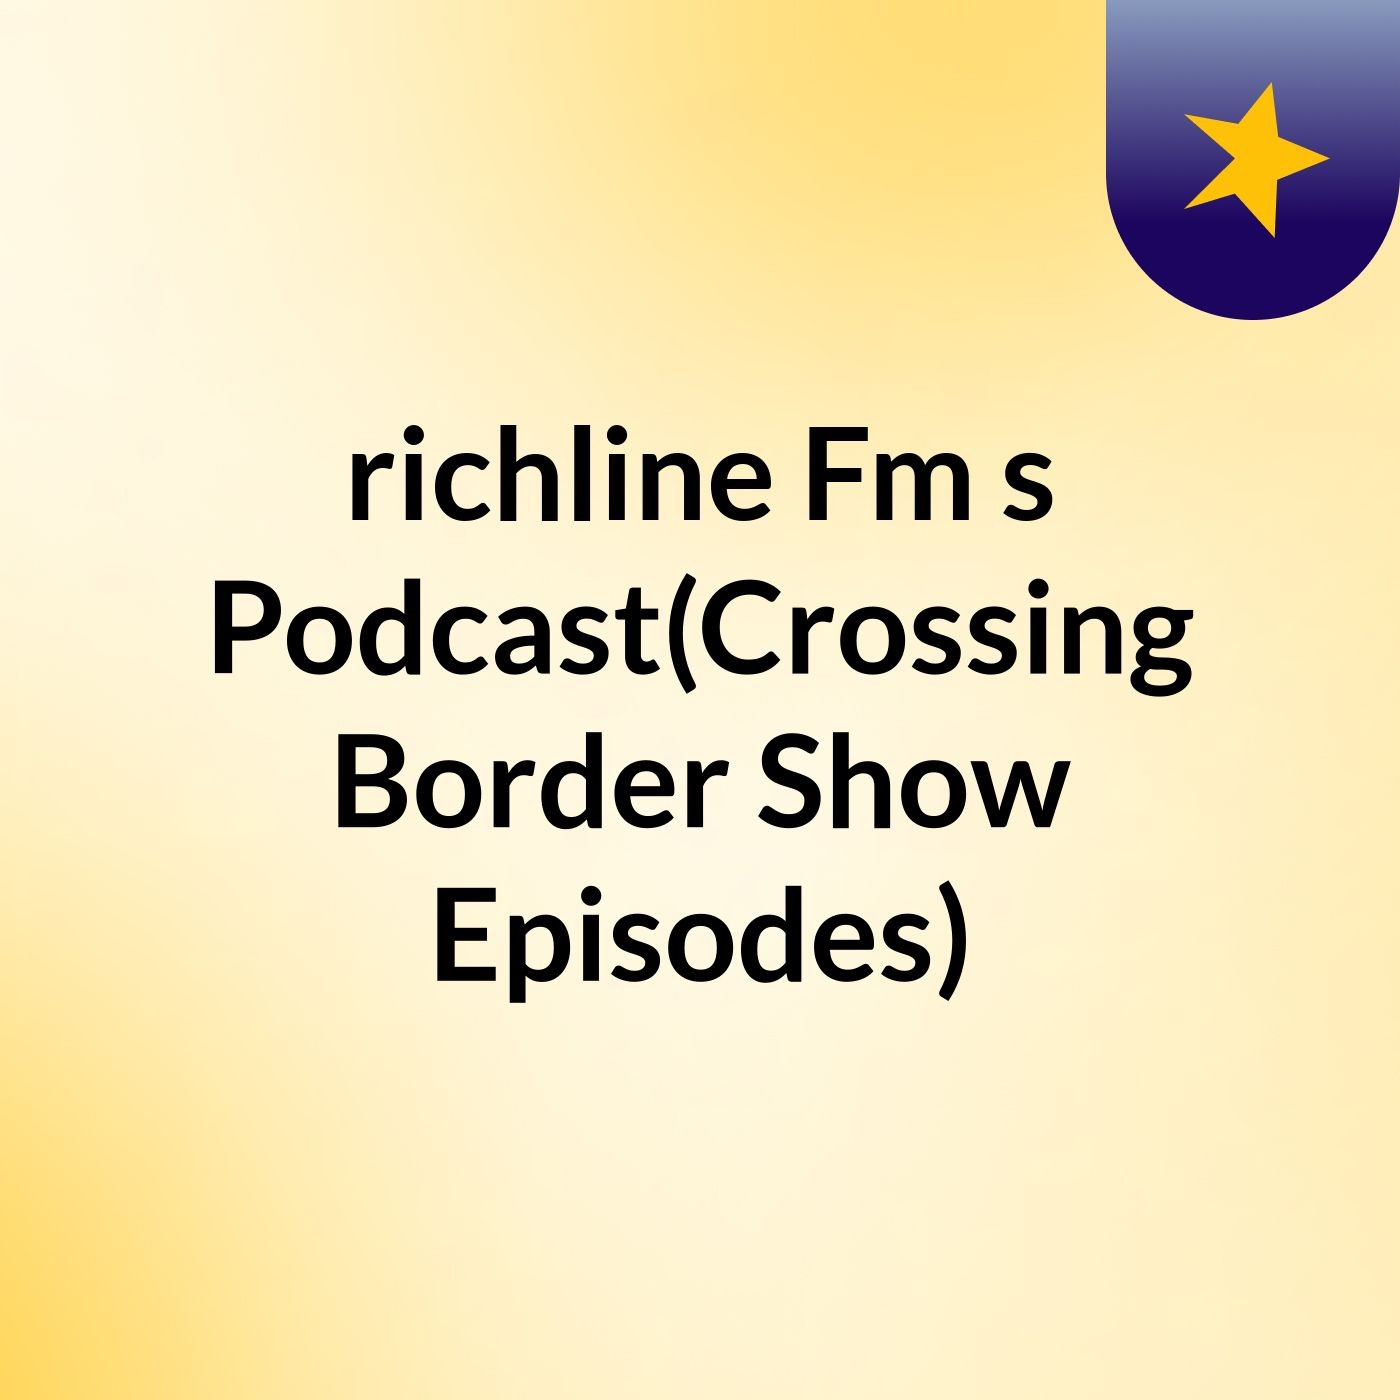 richline Fm's Podcast(Crossing Border Show Episodes)